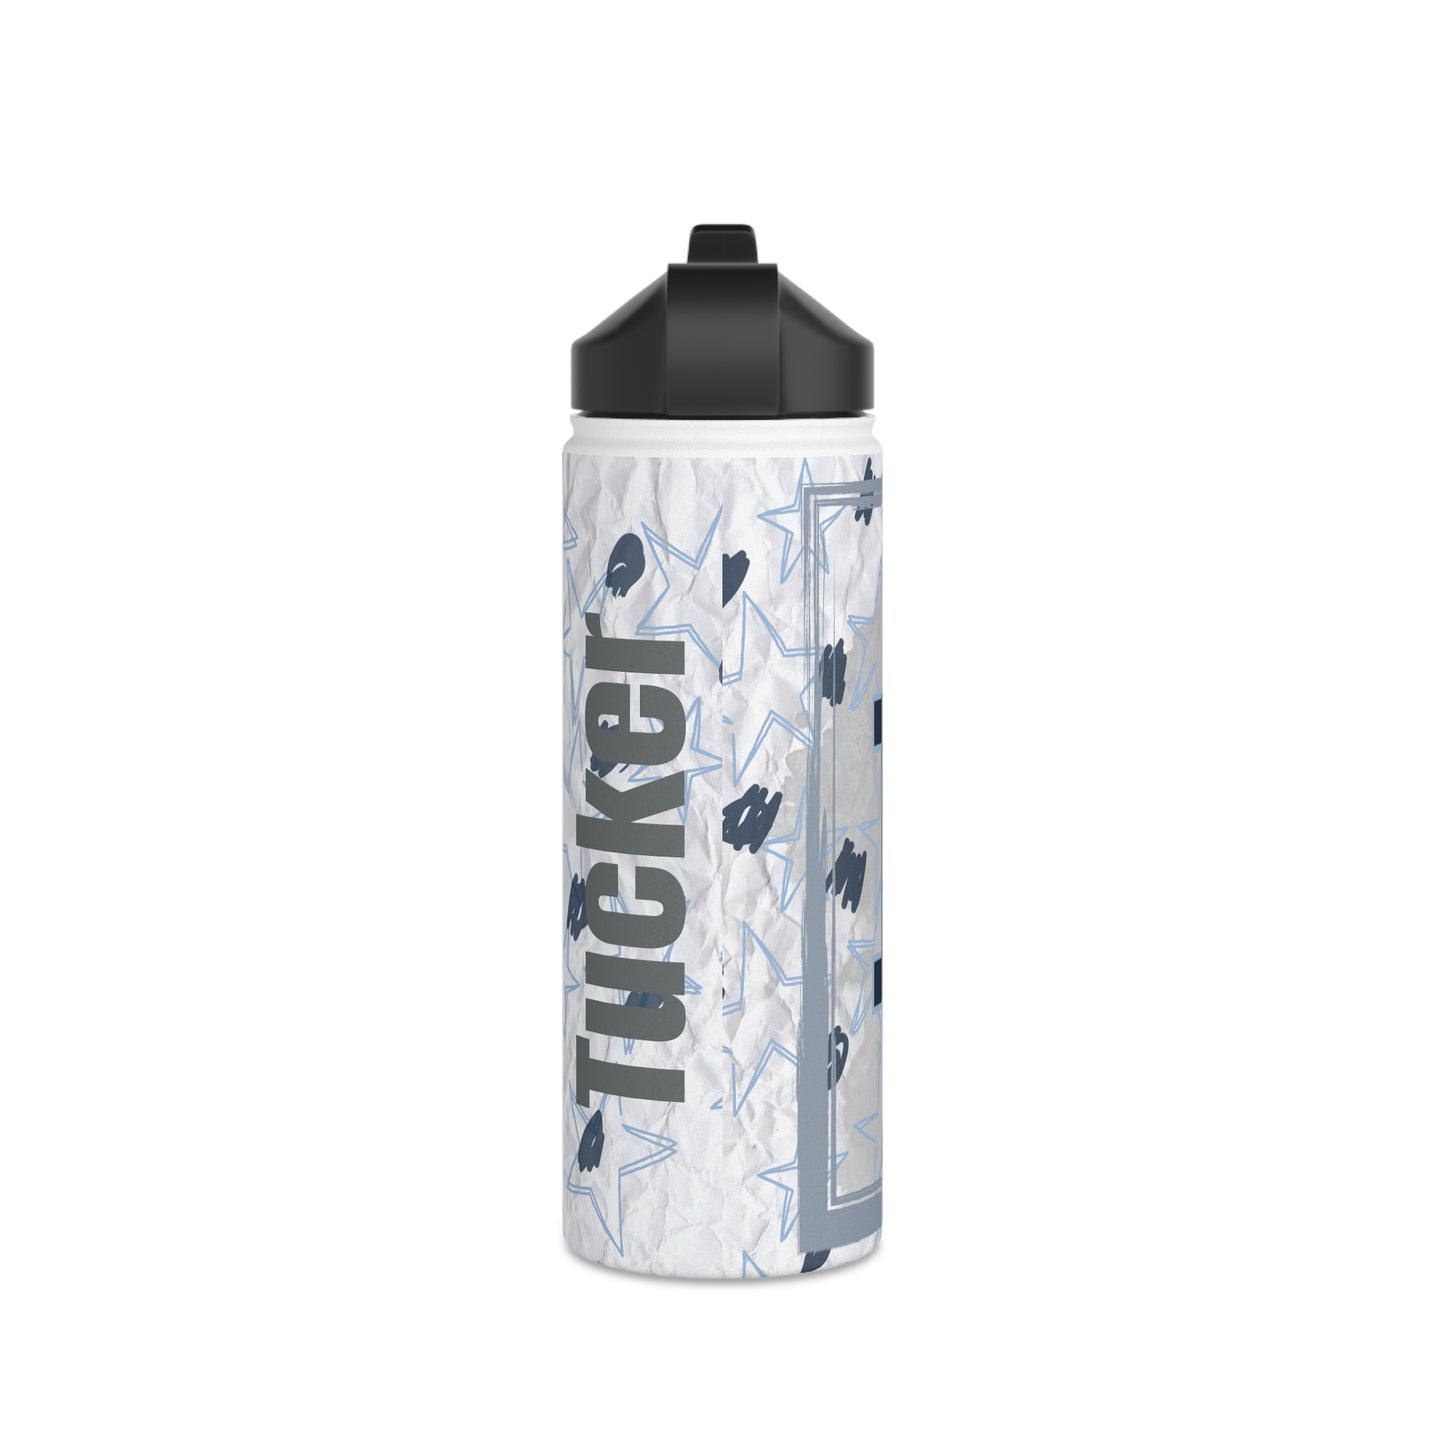 Mater Dei Stainless Steel Water Bottle